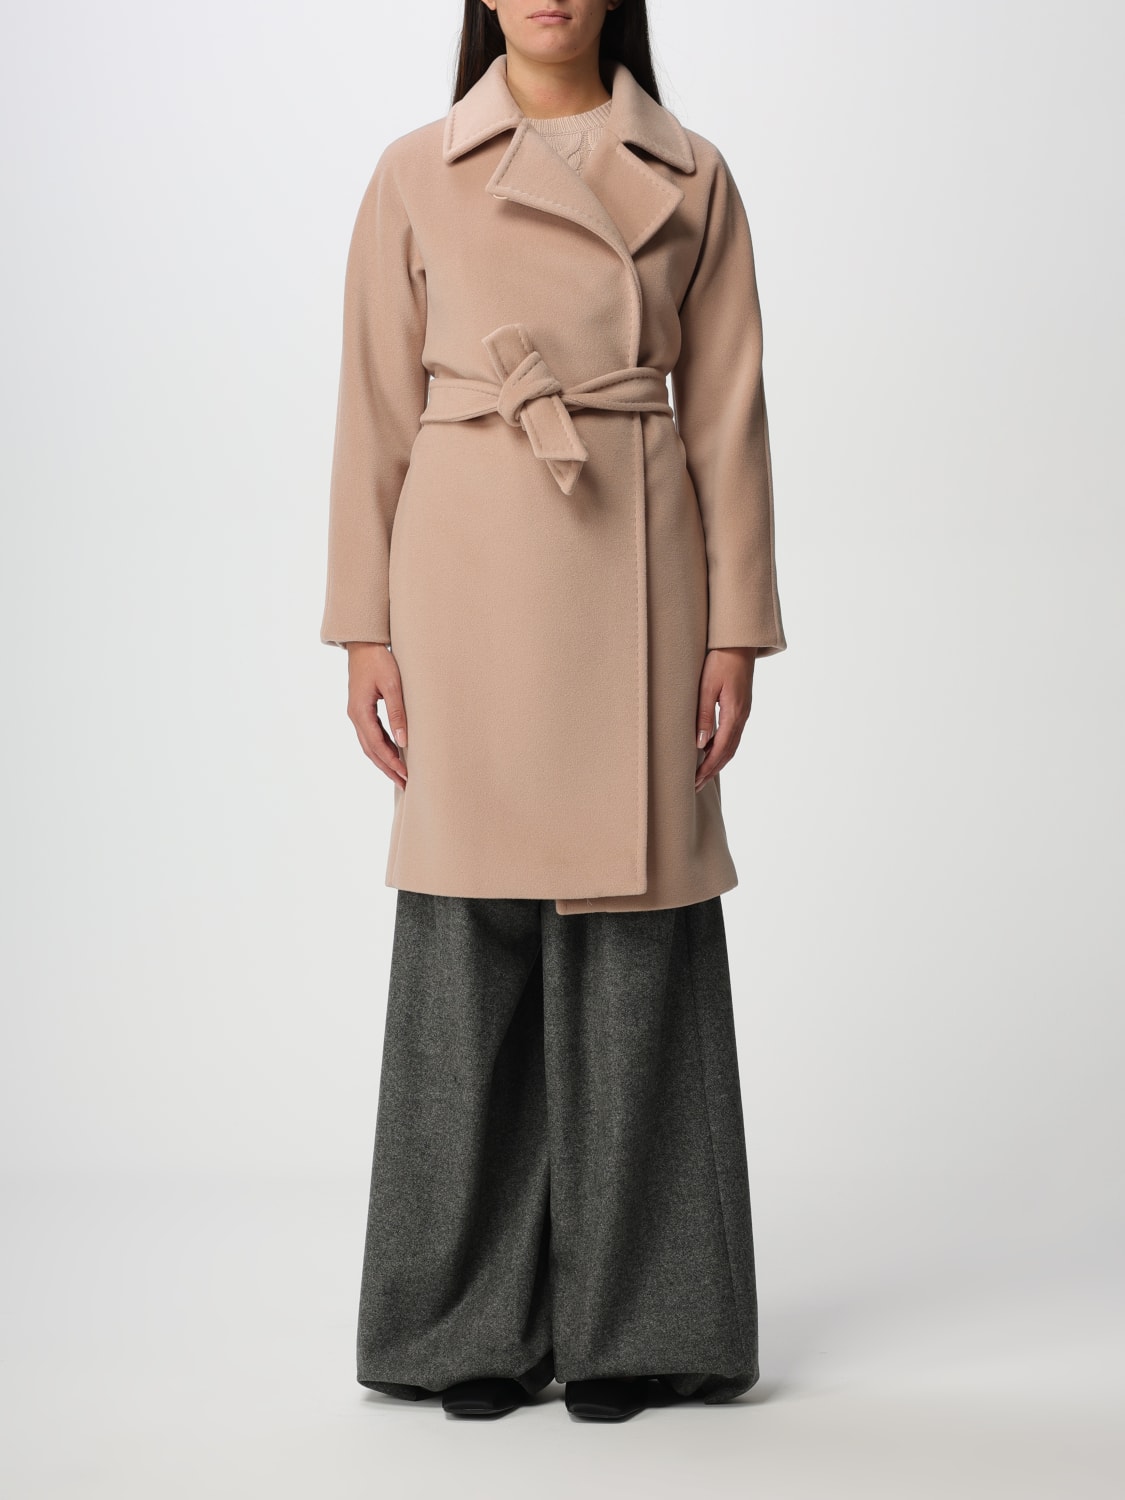 MAX MARA: Estella coat in wool and cashmere - Pink | Max Mara coat ...